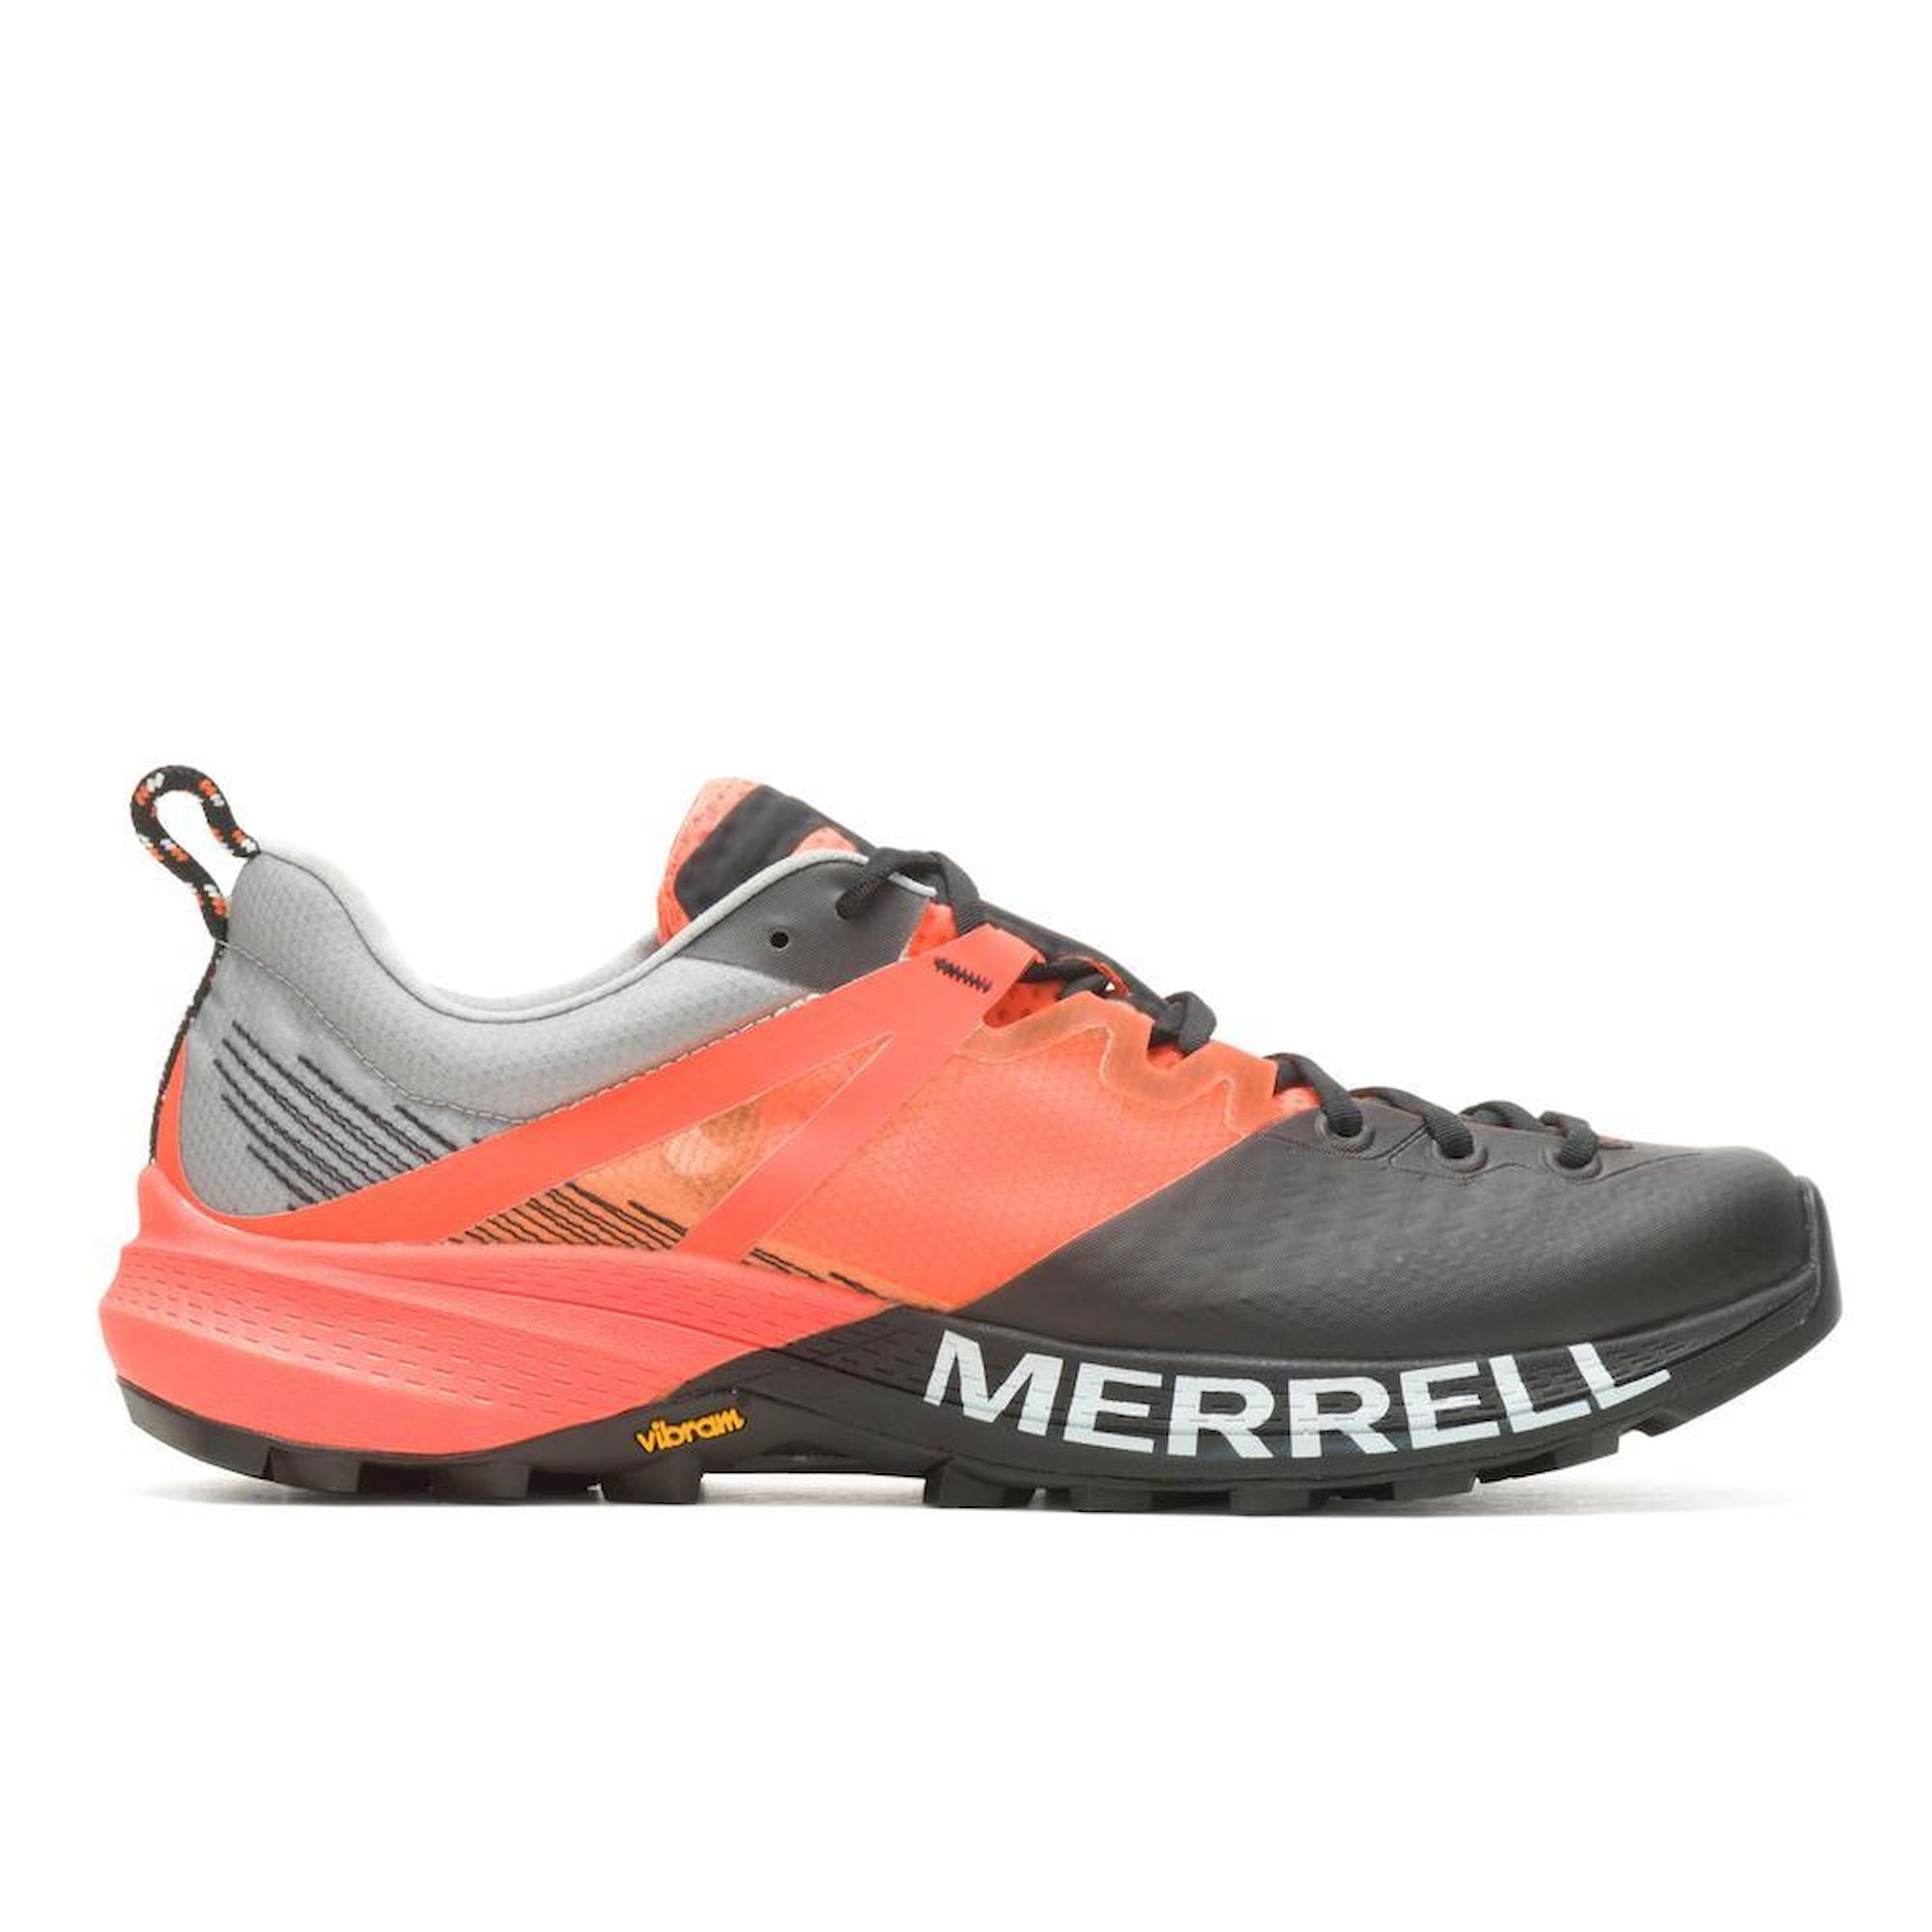 Merrell MTL MQM - Trailrunningskor - Herr